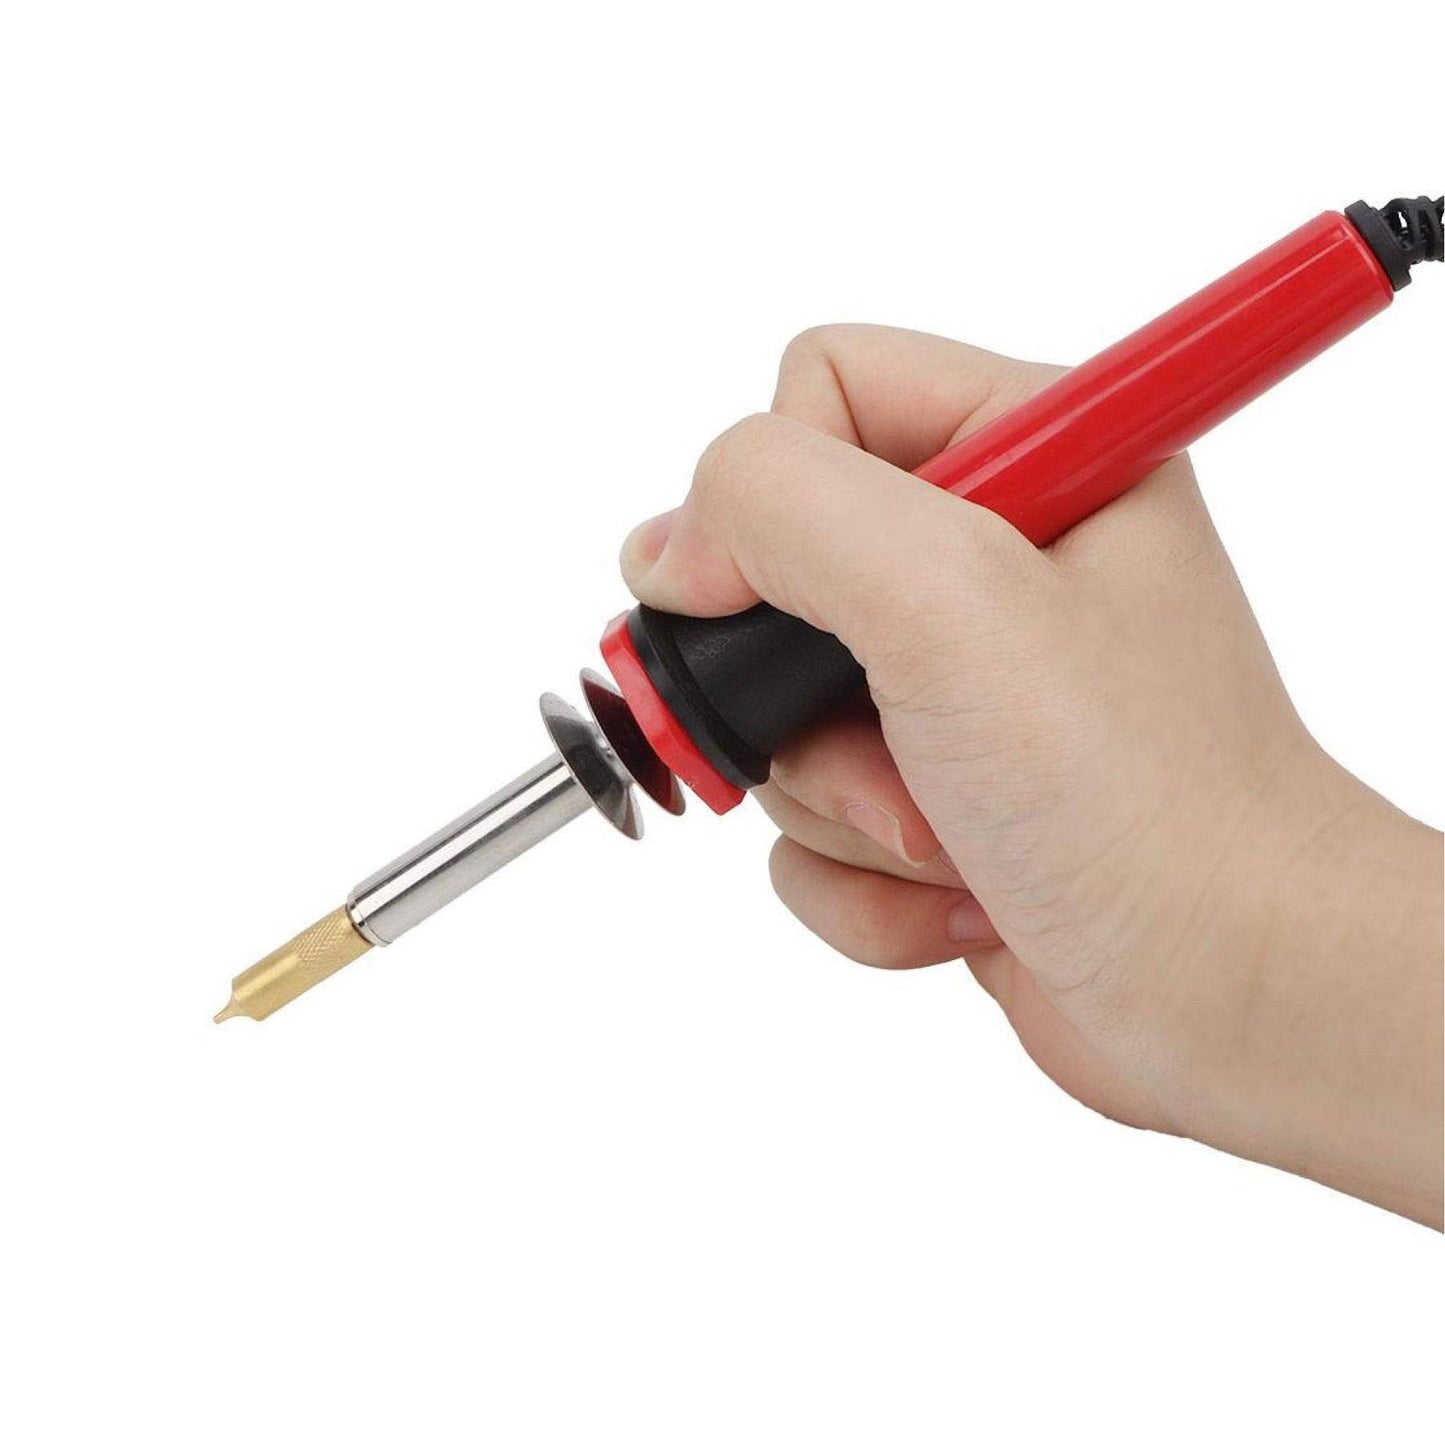 Electric Engraving Pen